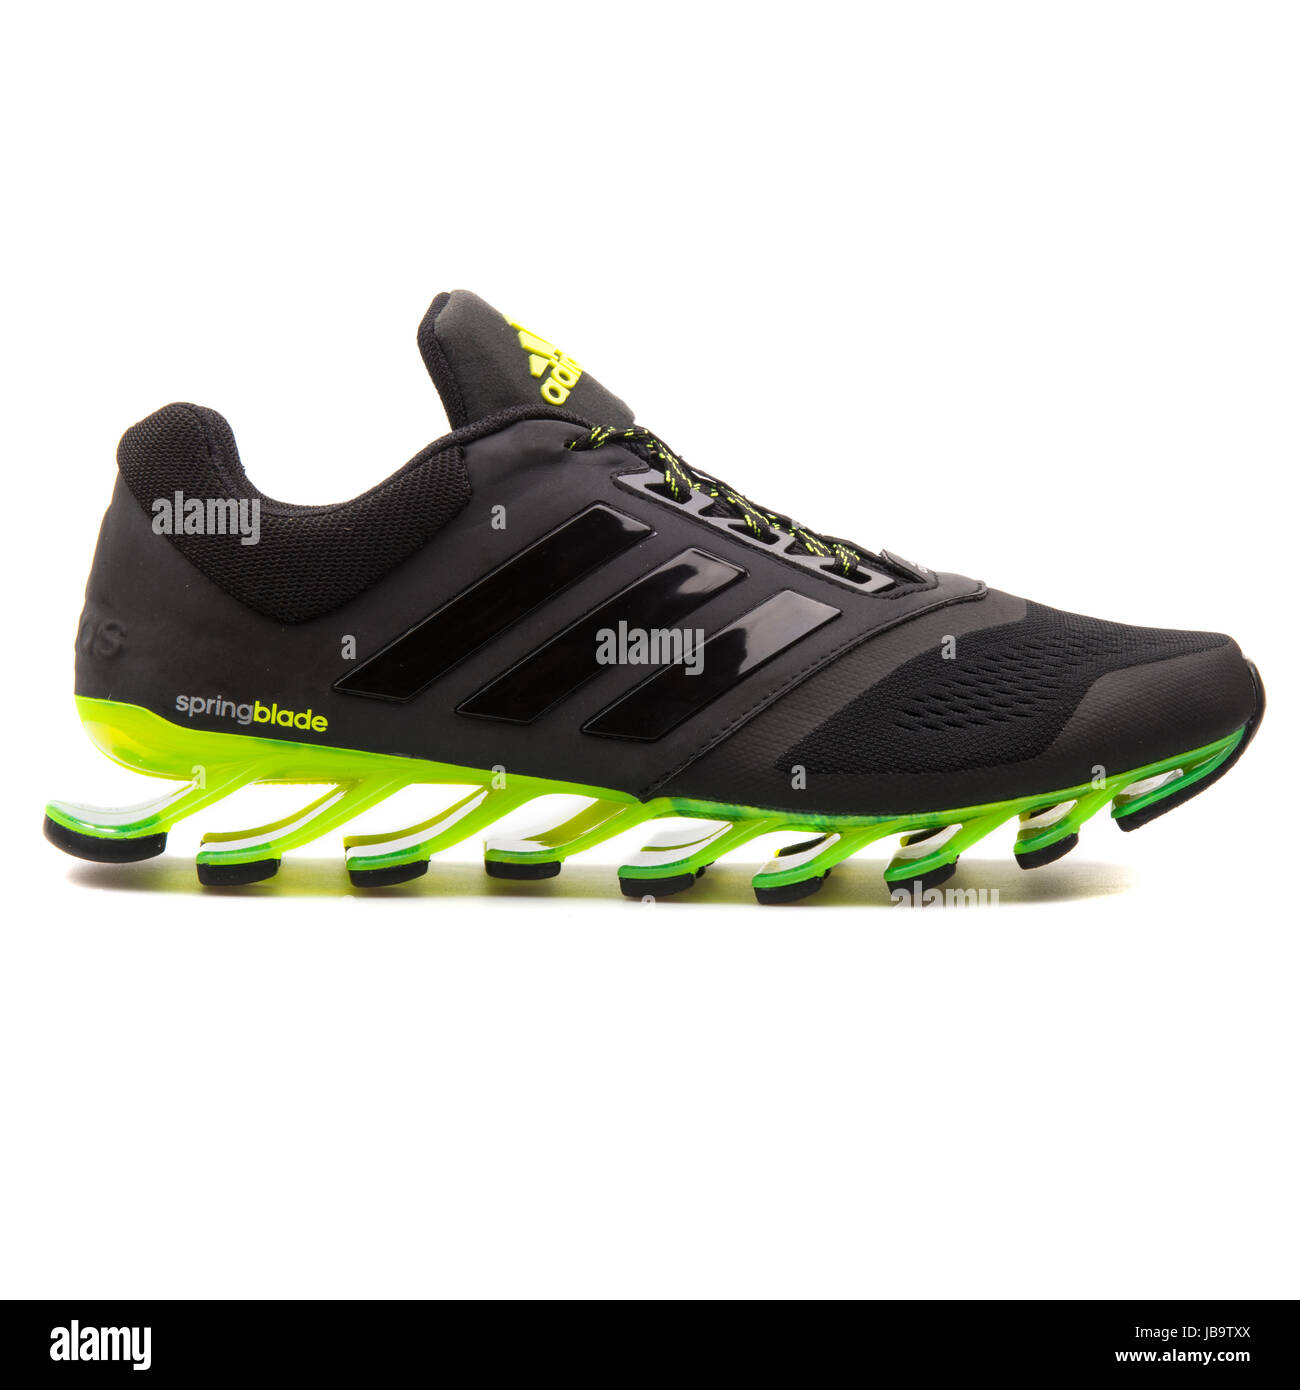 Adidas Springblade Drive 2 m noir et vert Men's Running Sneakers - D69684  Photo Stock - Alamy